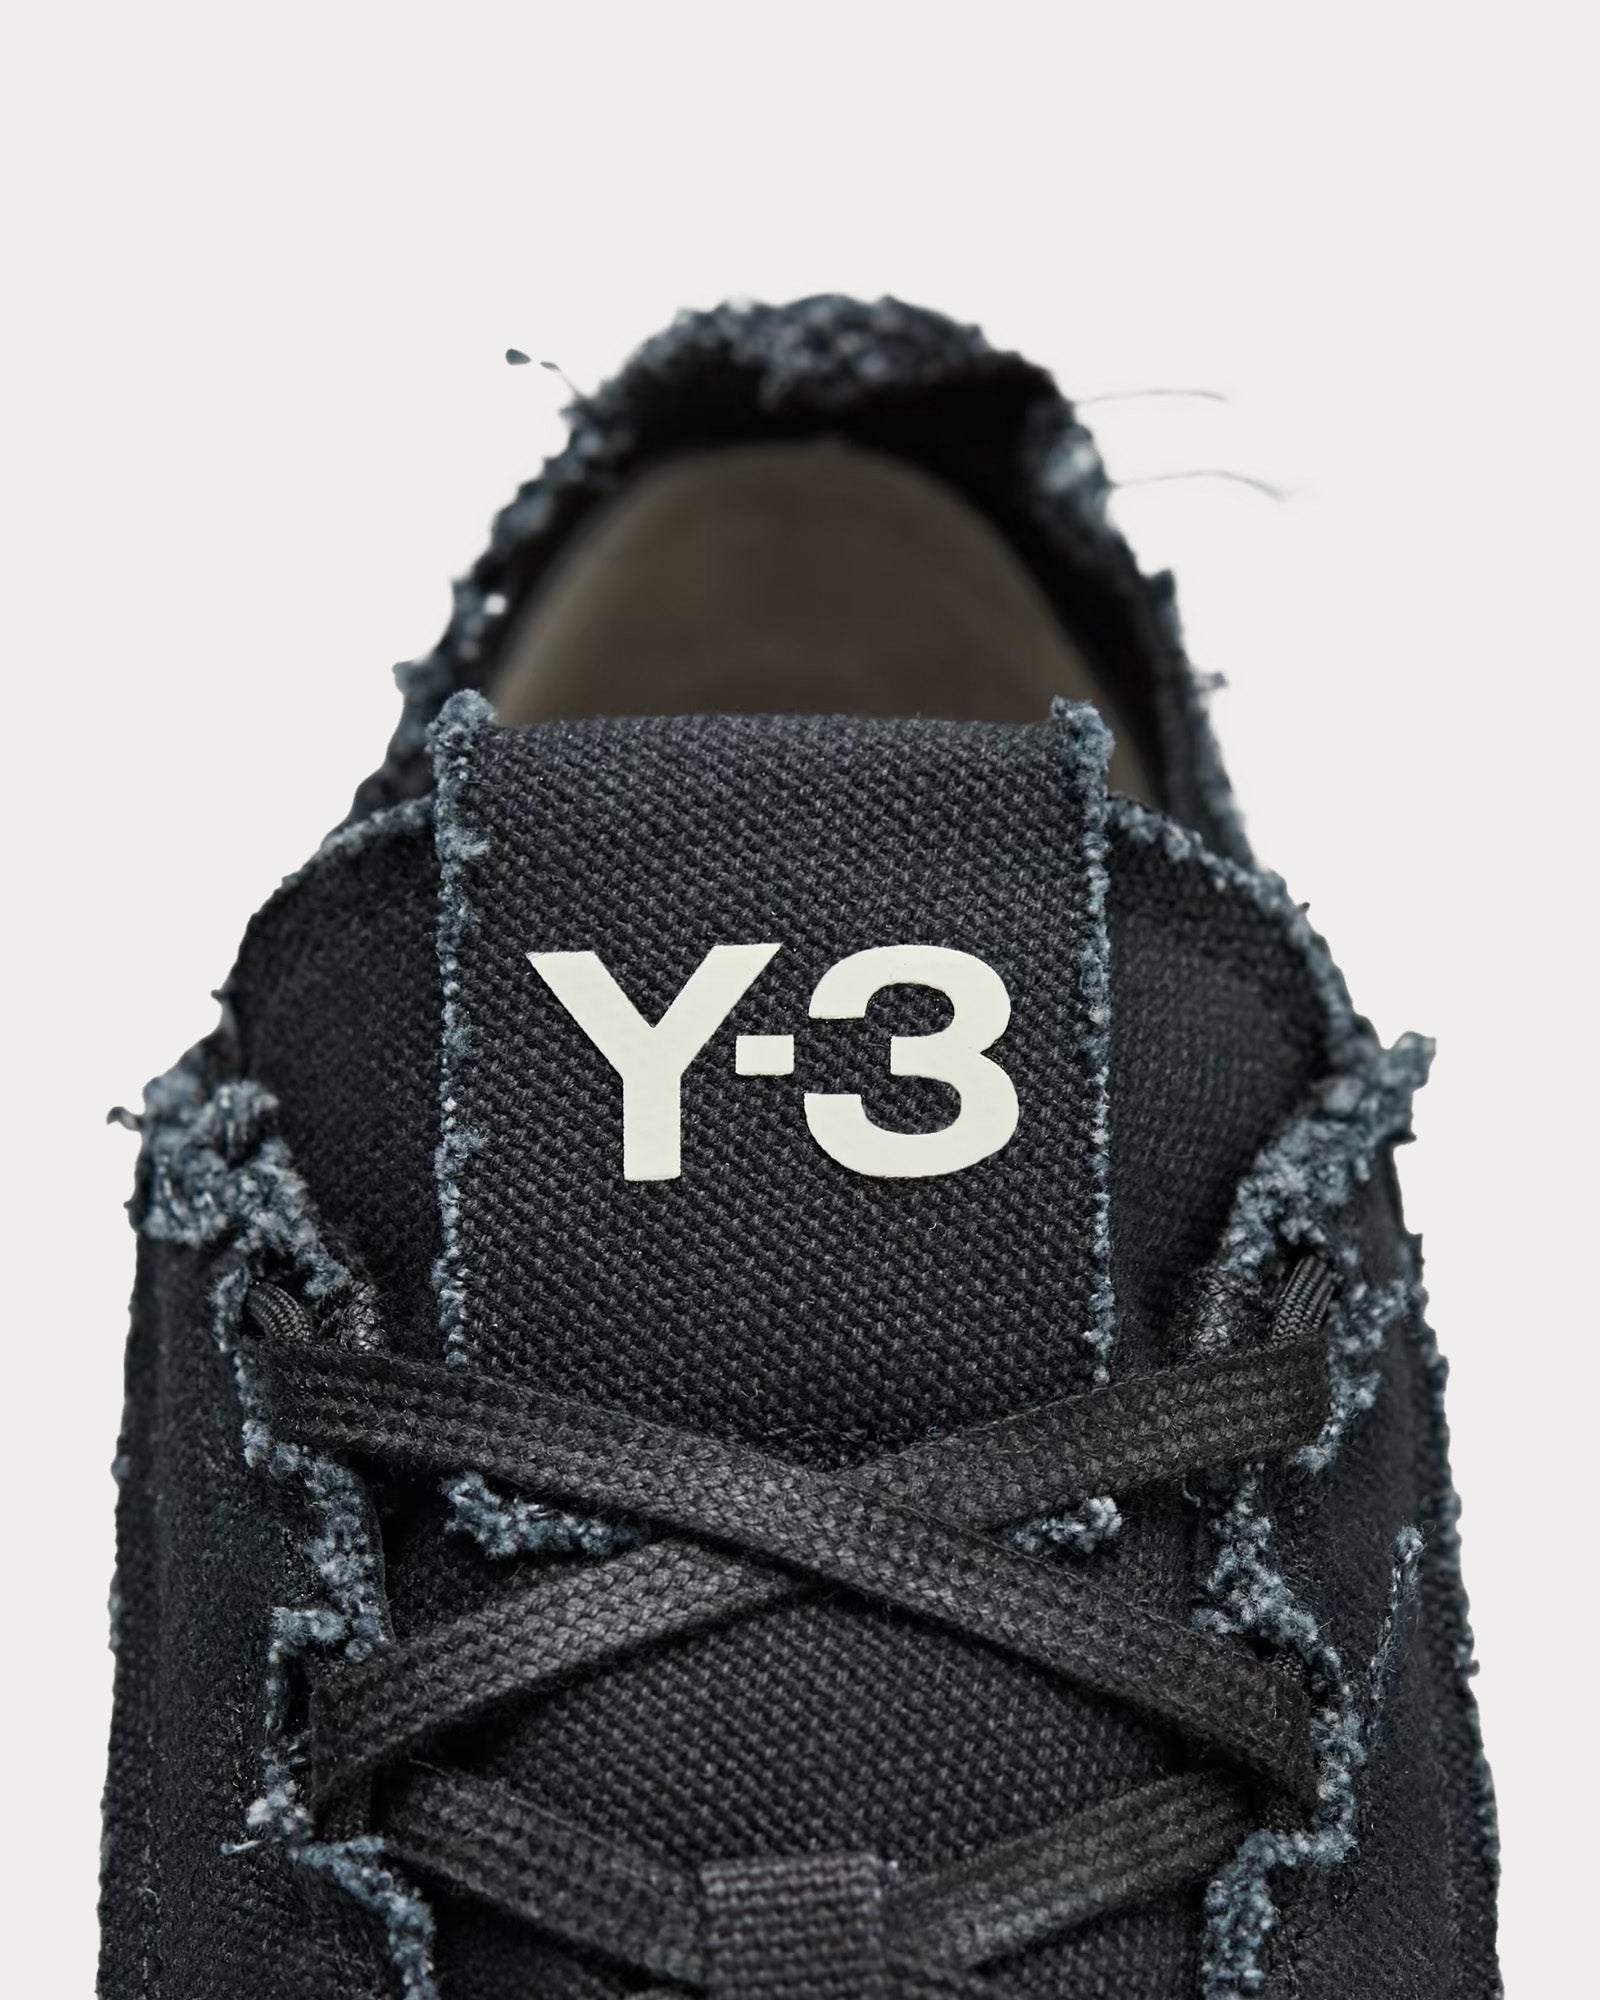 Y-3 - Nizza Low Black / Black / Off White Low Top Sneakers